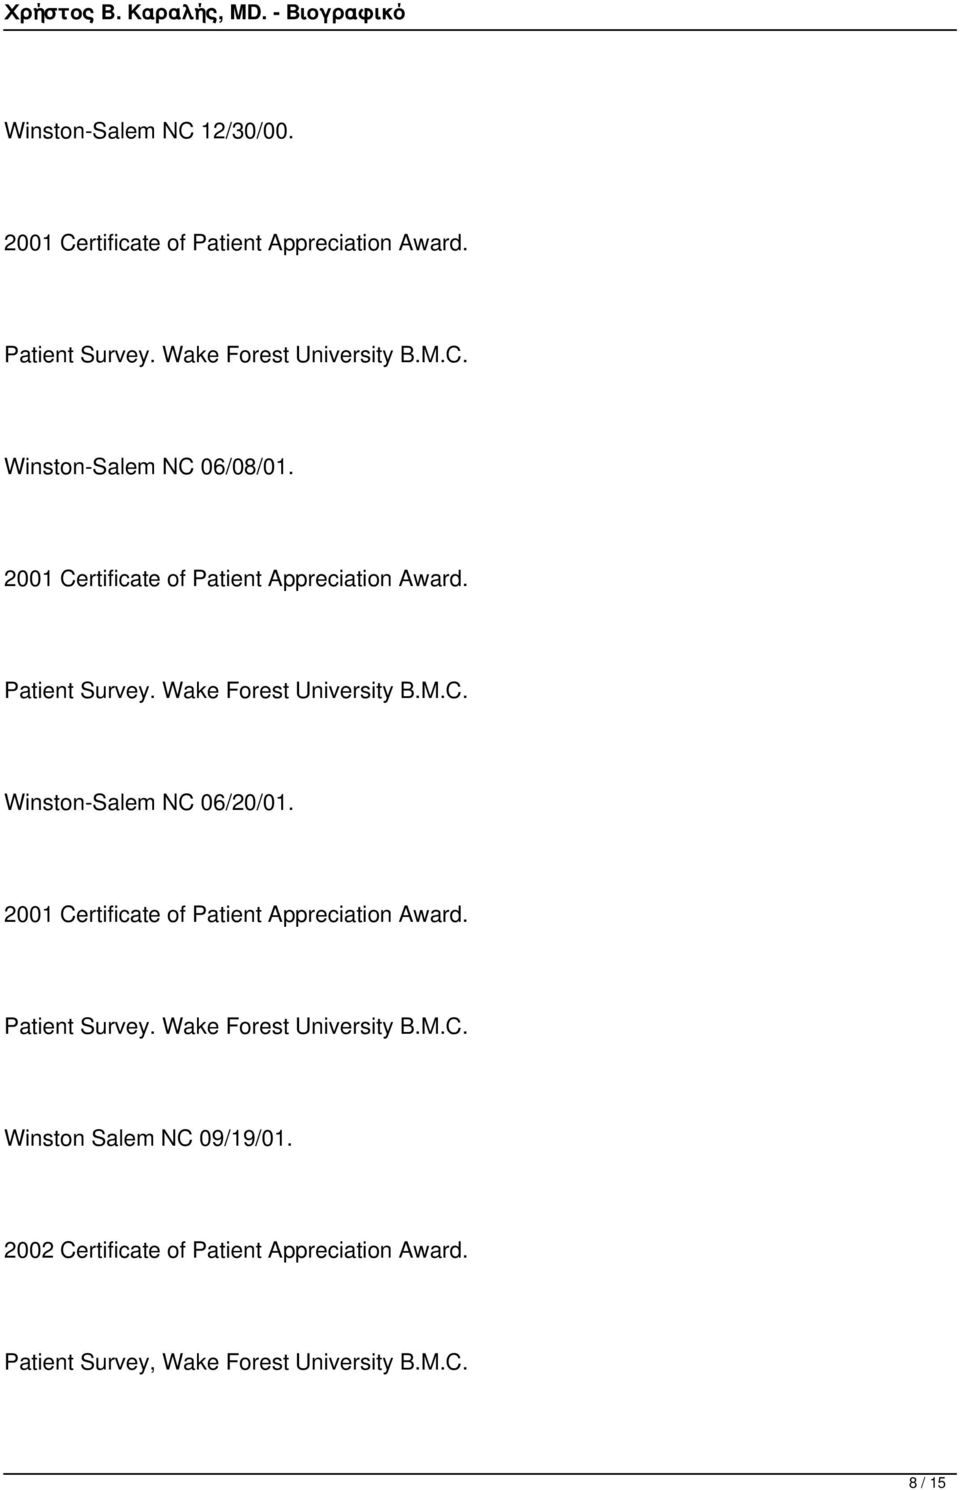 2001 Certificate of Patient Appreciation Award. Patient Survey. Wake Forest University B.M.C. Winston Salem NC 09/19/01.